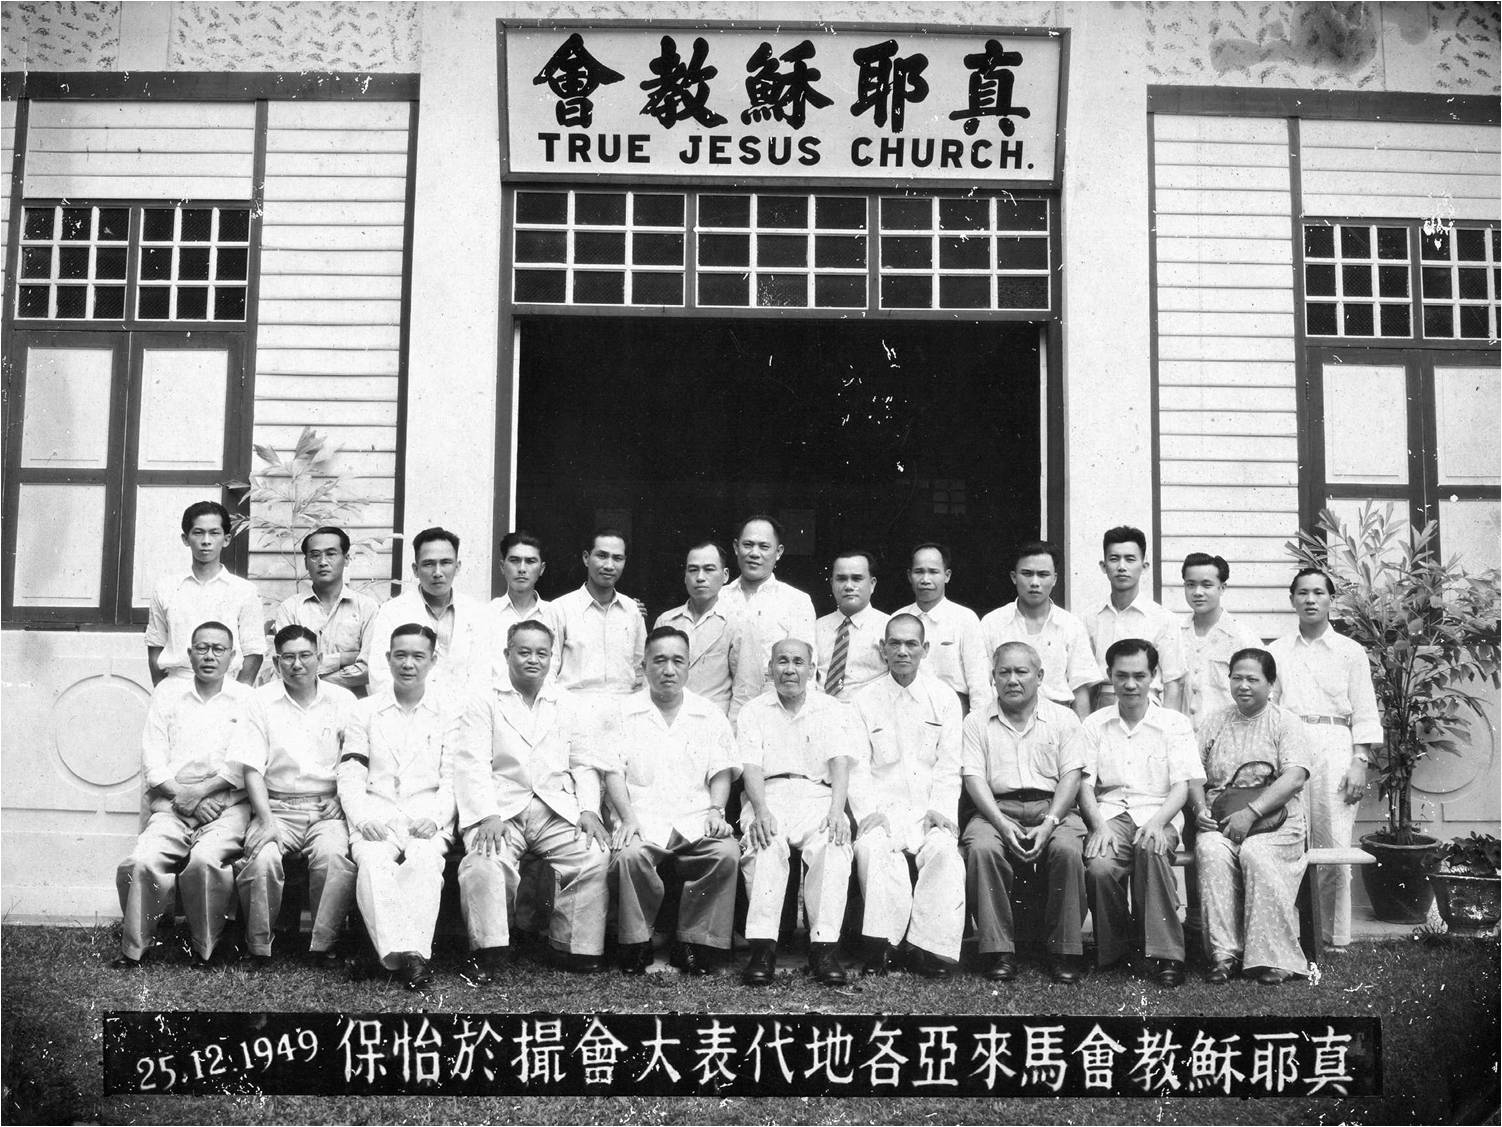 TJC Malaysia National Churches Meeting in Ipoh 真耶稣教会马来亚各地代表大会于怡保 25/12/1949